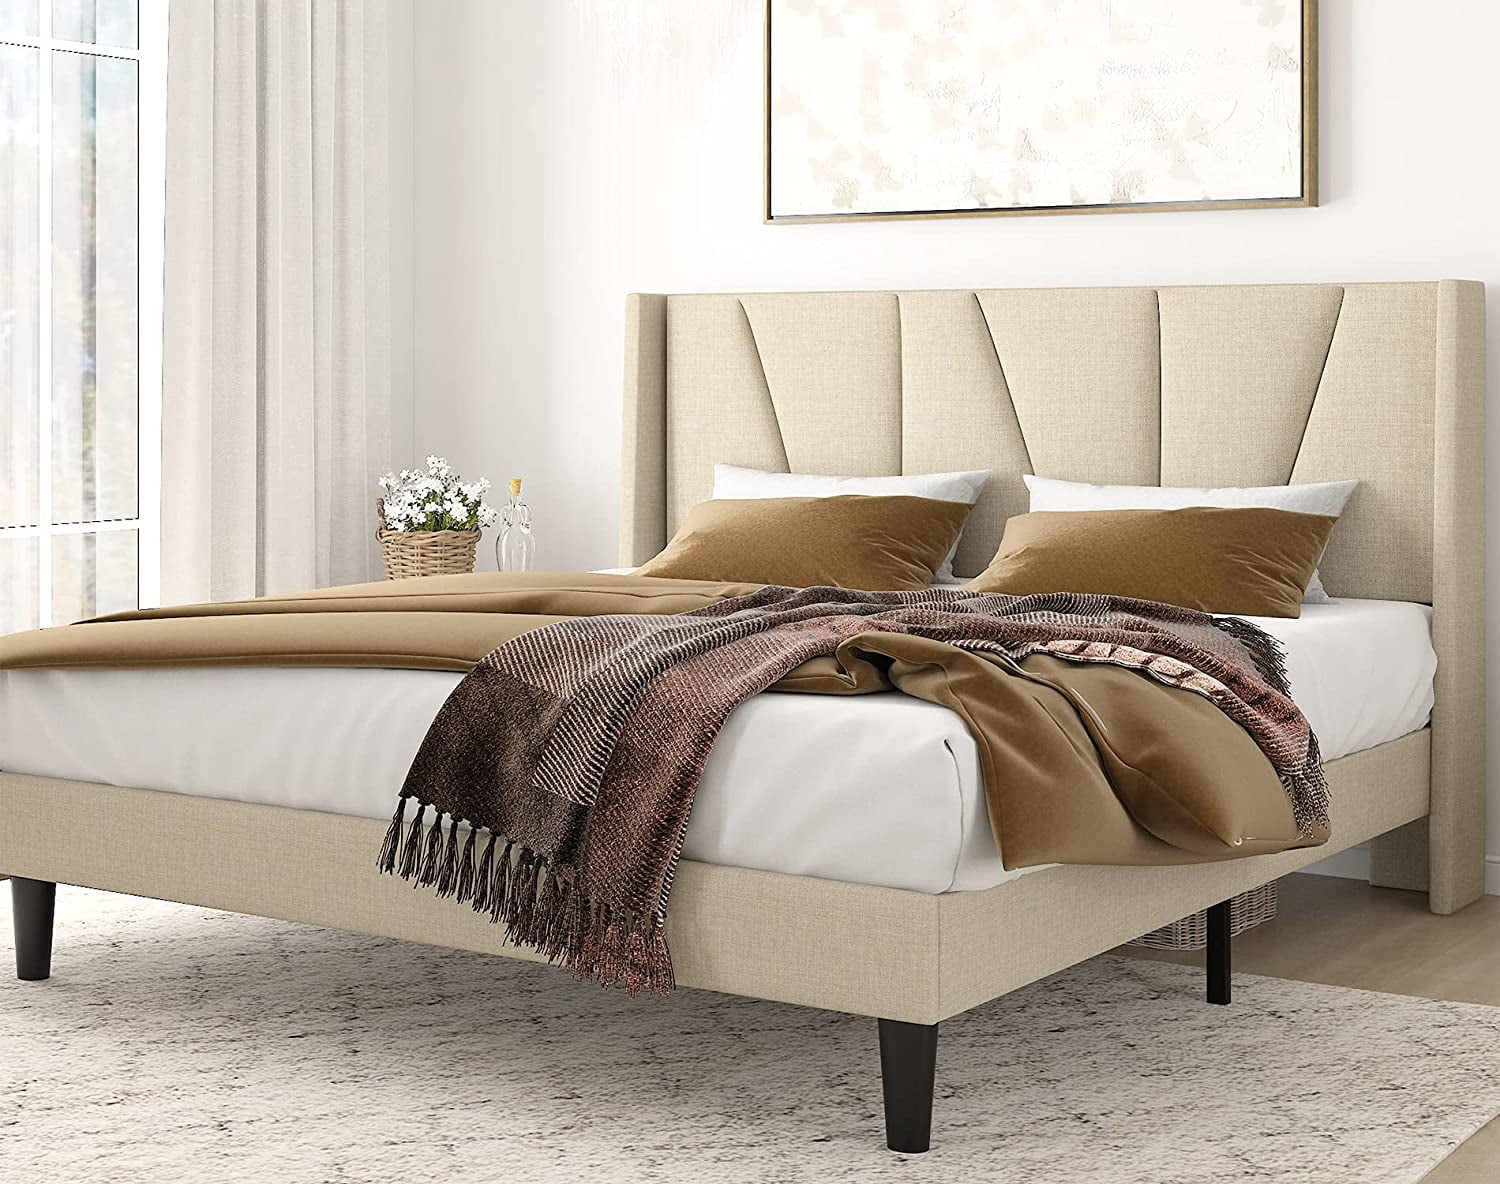 Amolife King Size Upholstered Platform, King Size Wingback Upholstered Bed